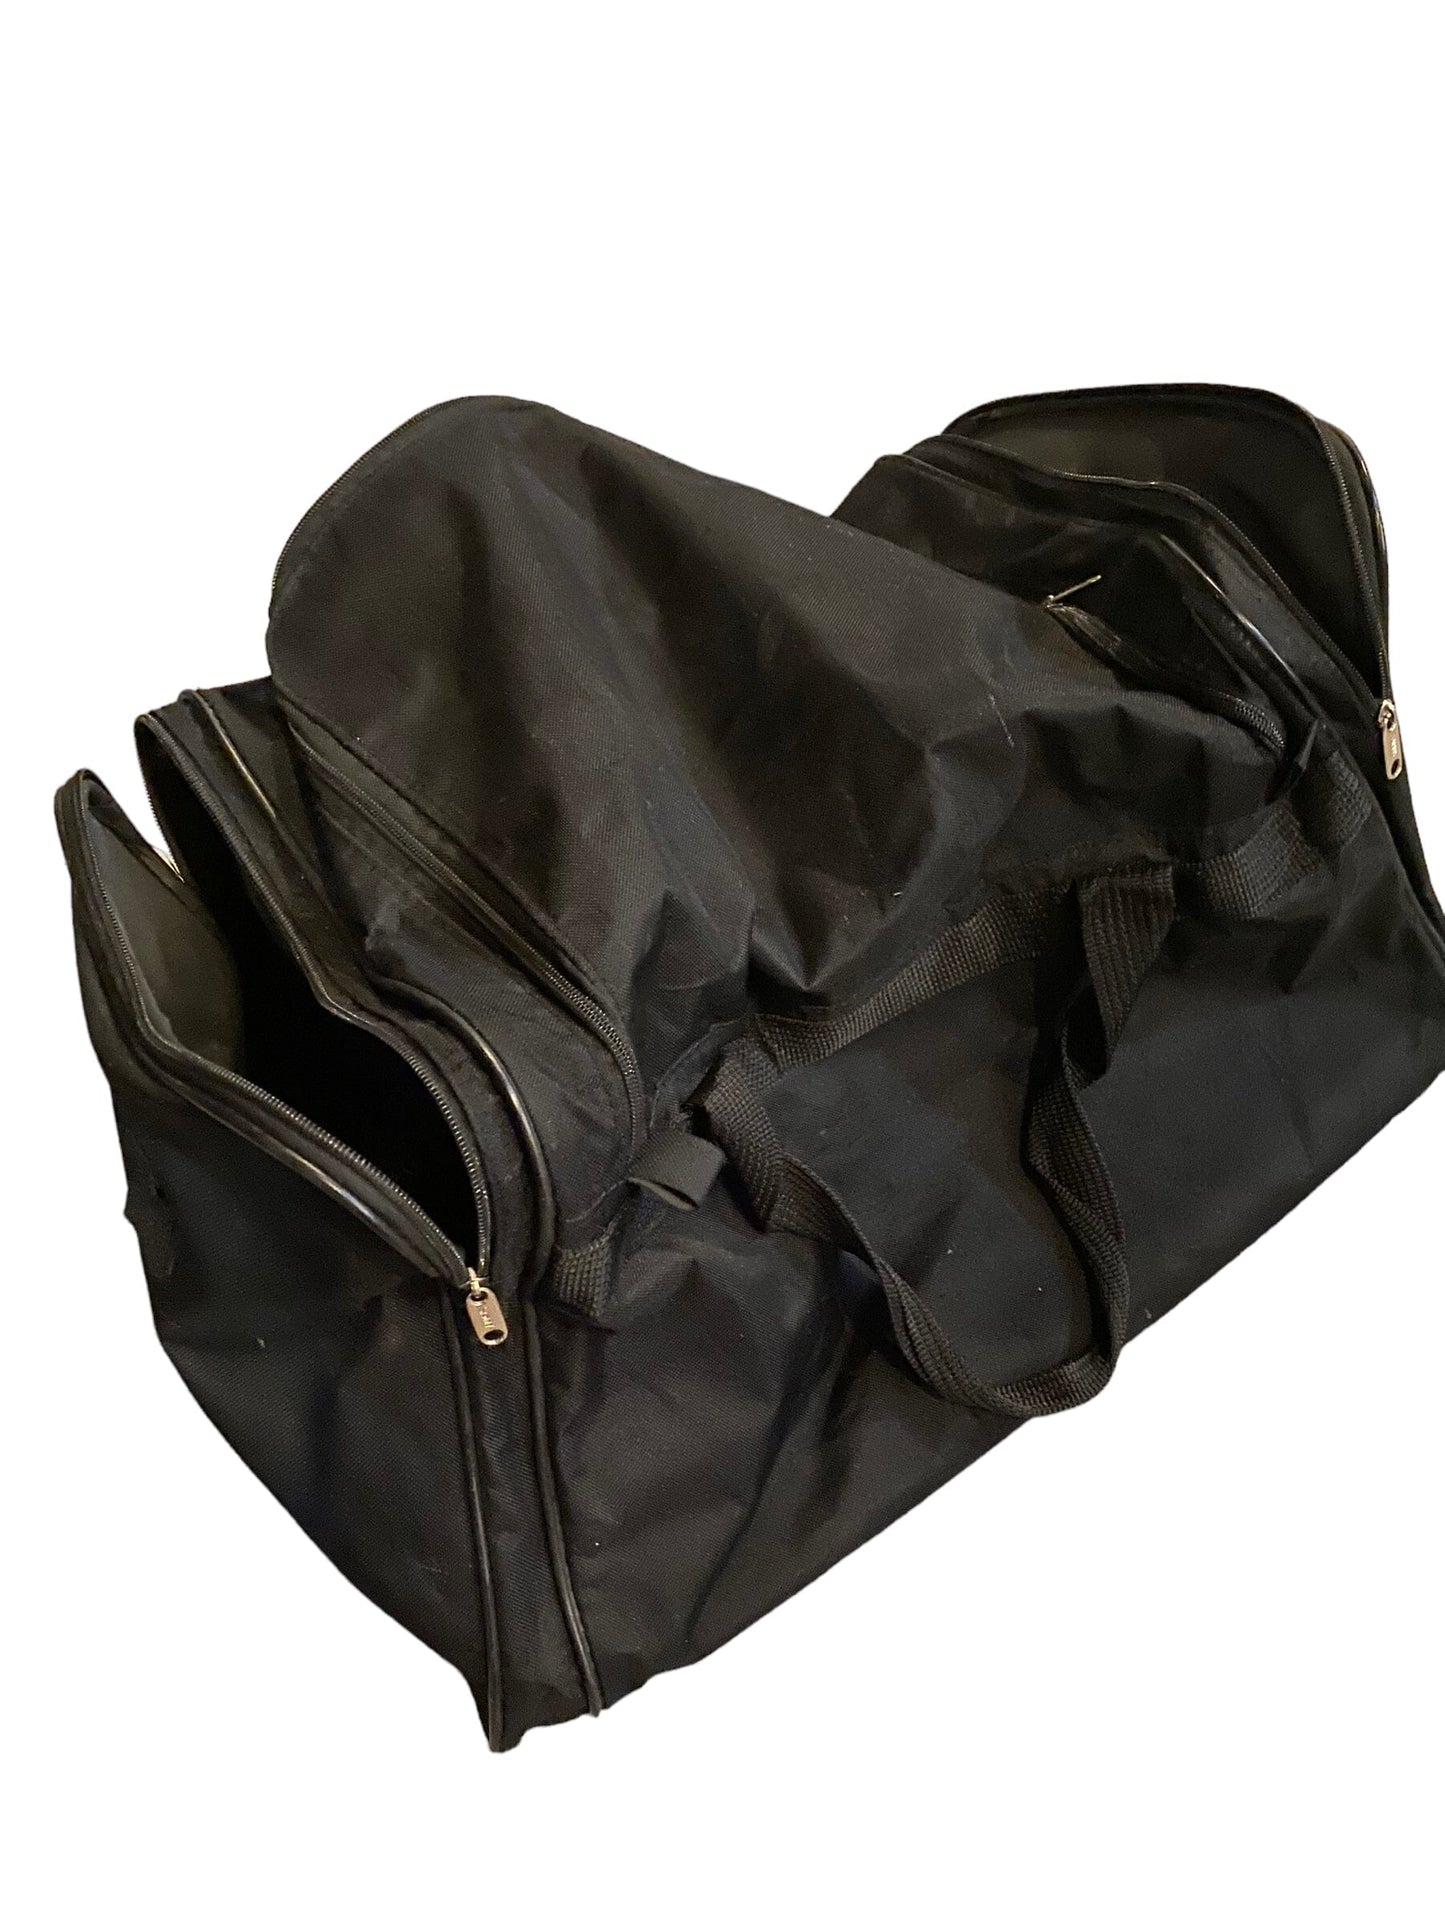 Used Duffel Bag CPXBrosPaintball 